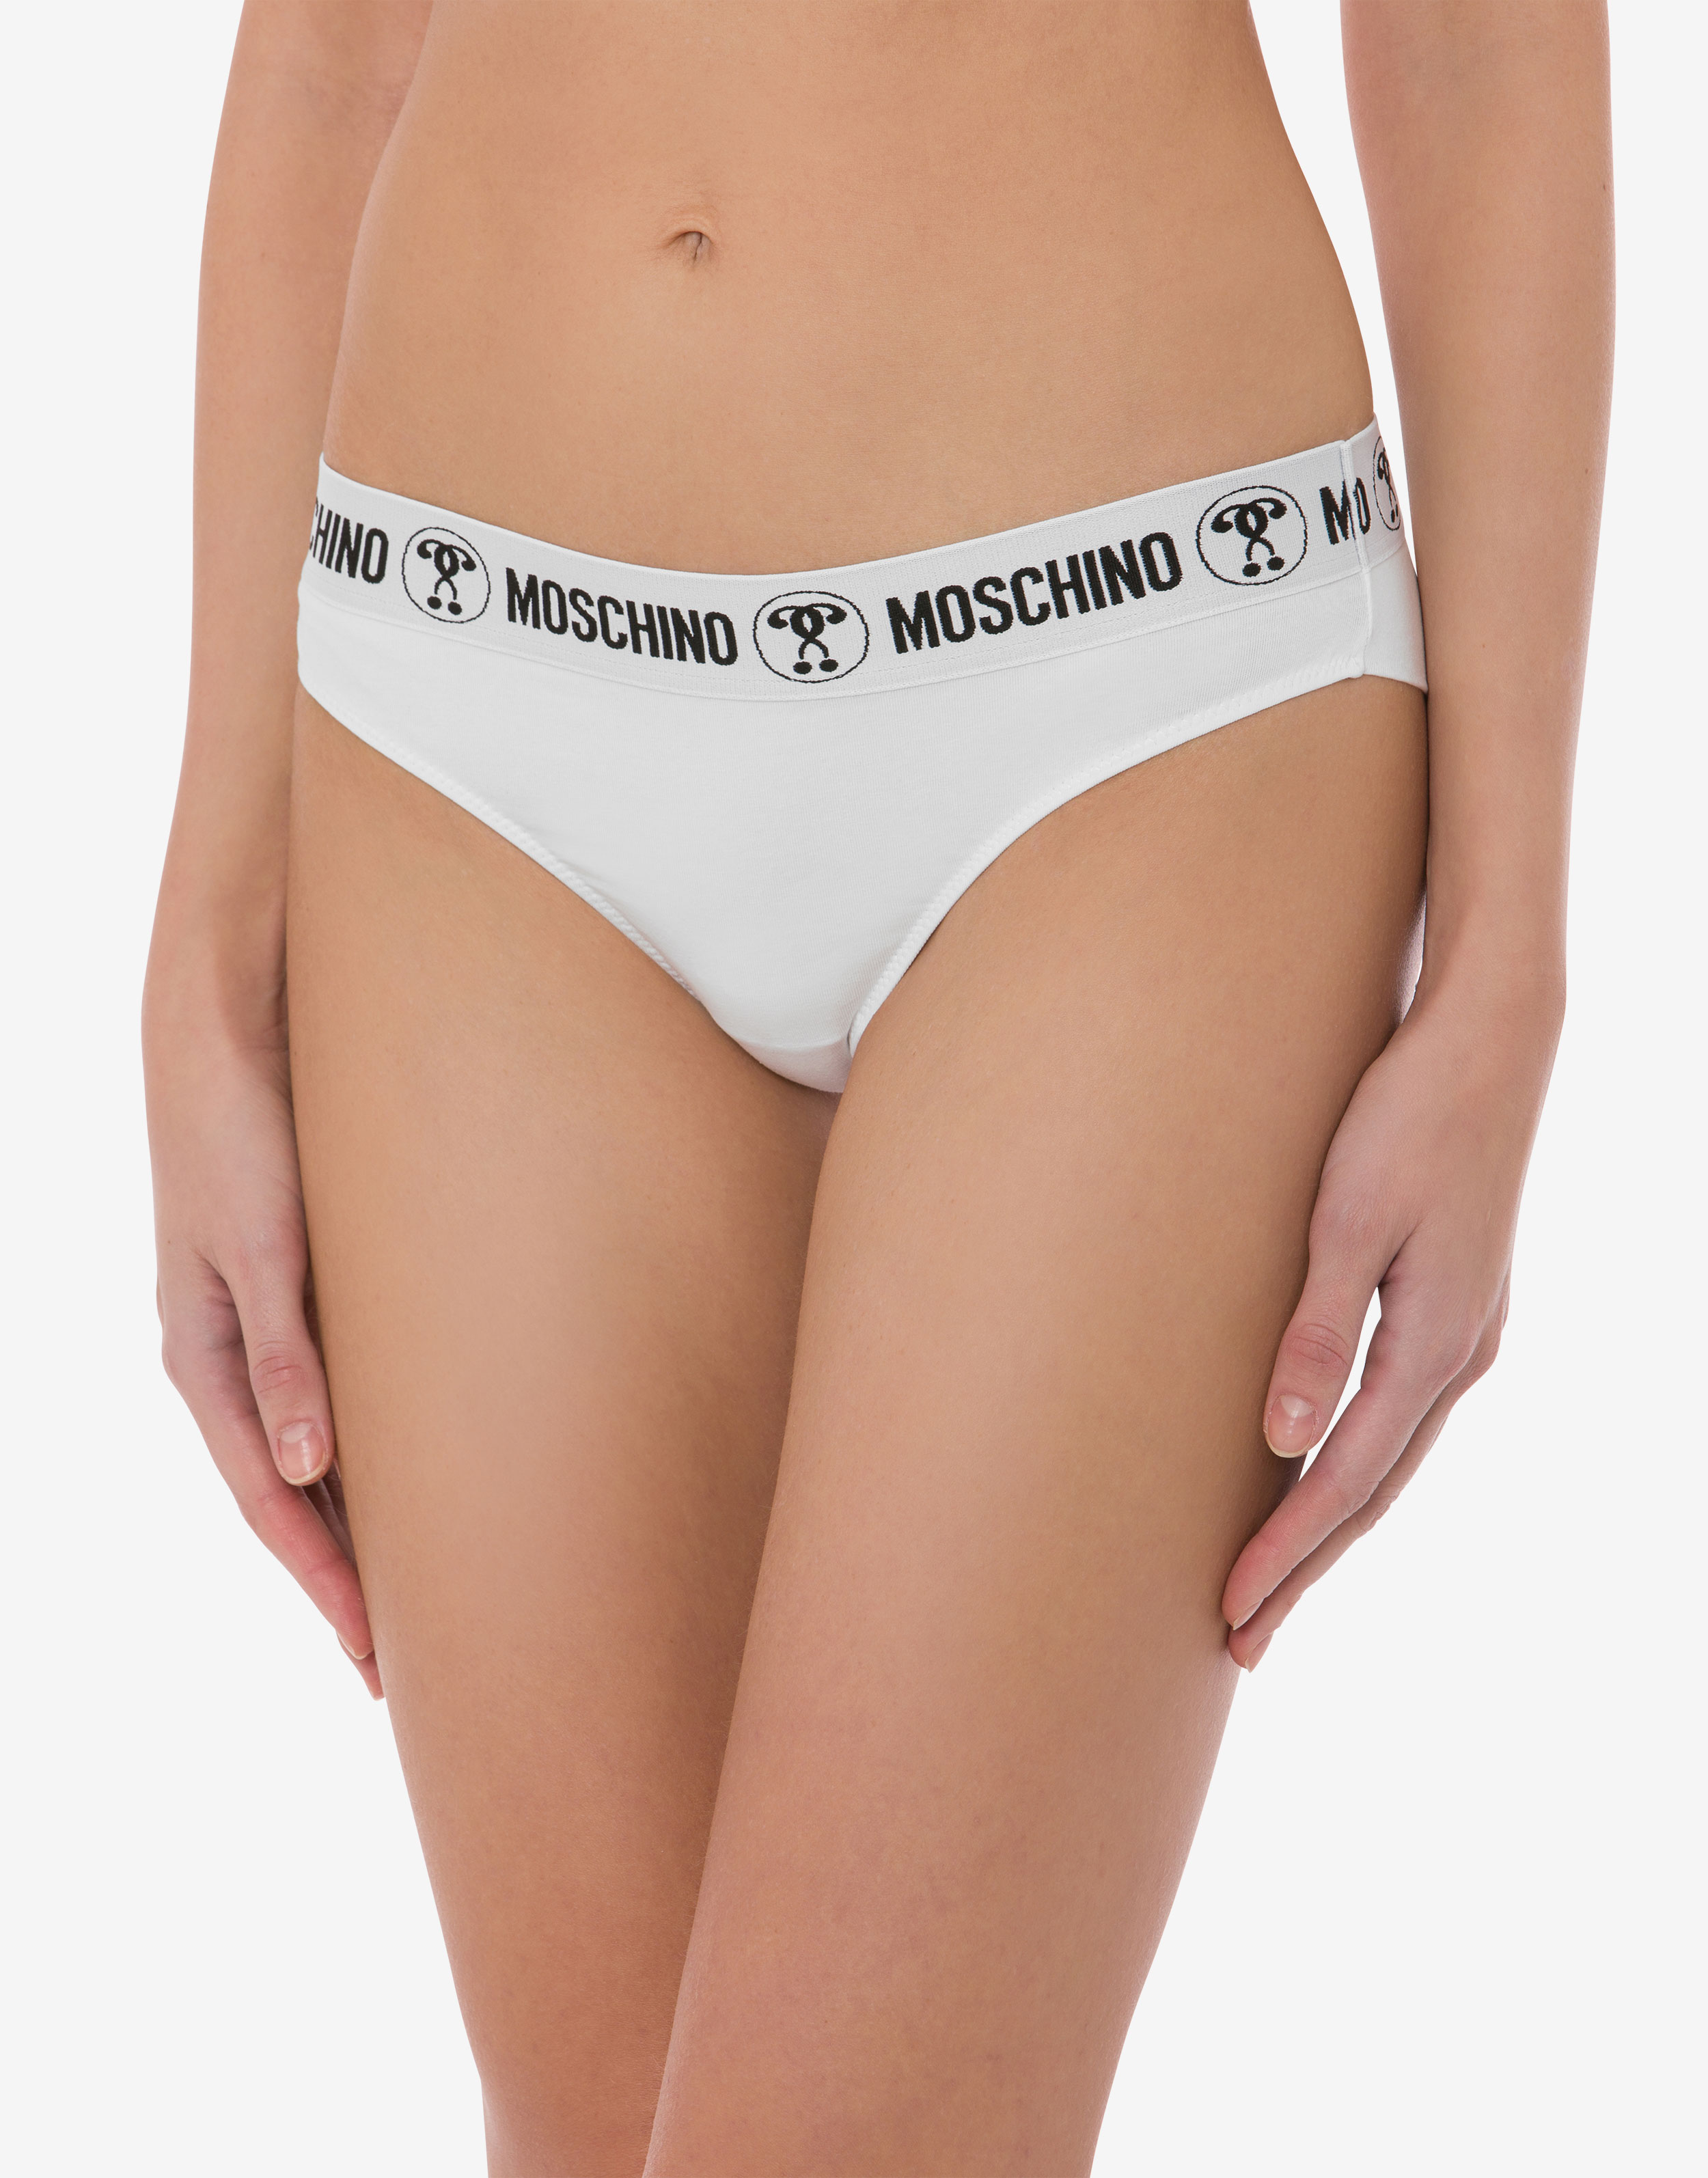 Moschino Underwear Women's Pink Body XS at FORZIERI